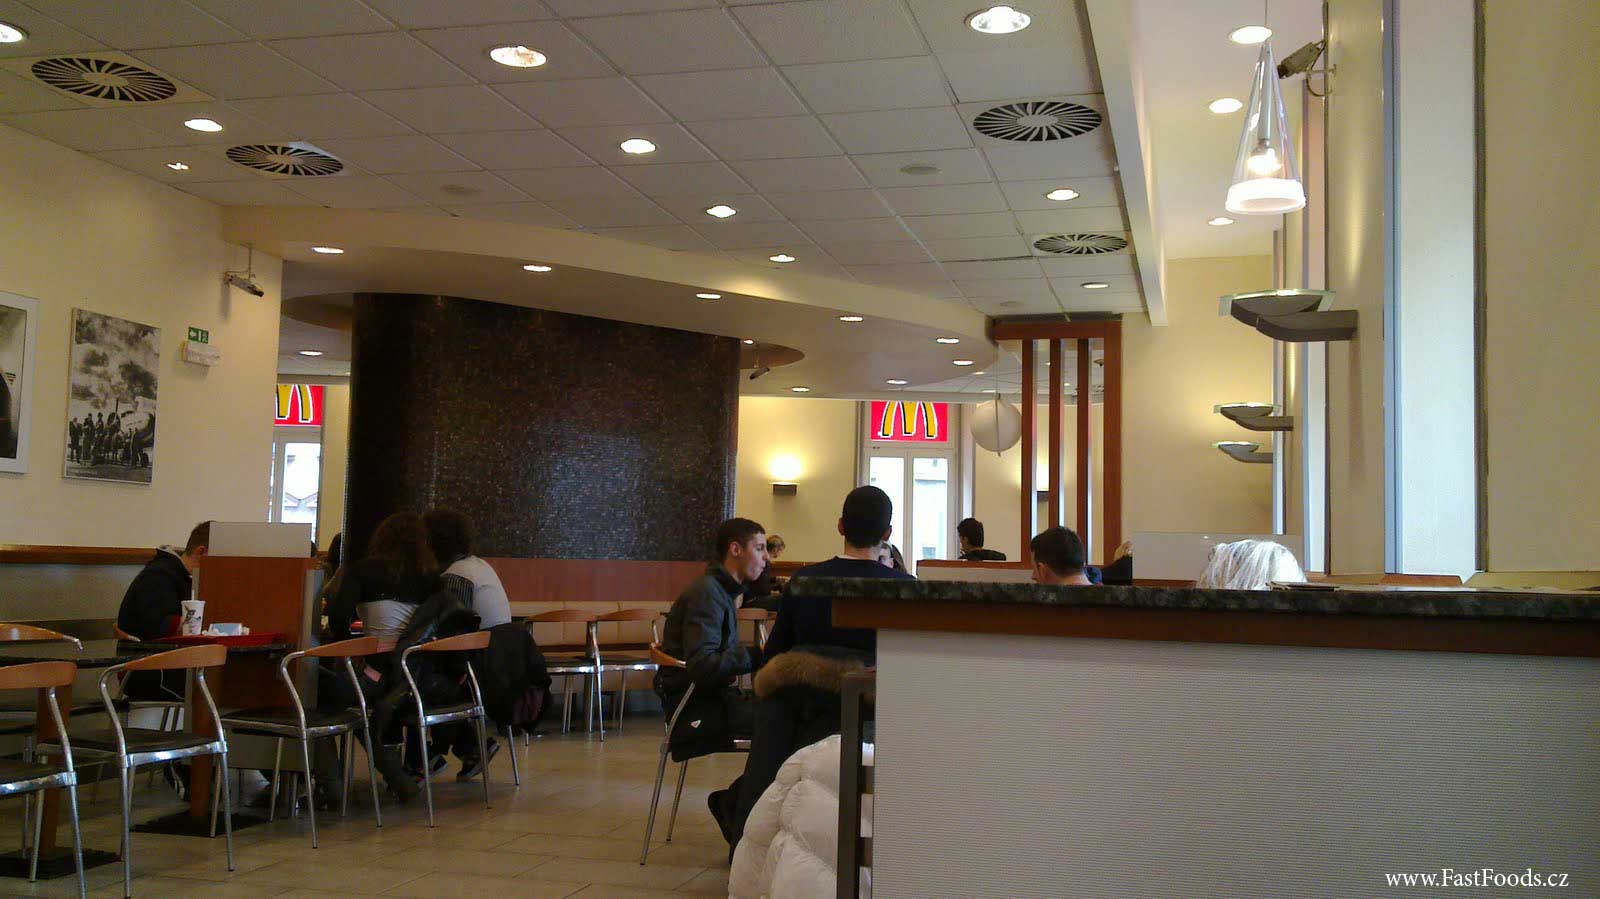 McDonalds IP Pavlova